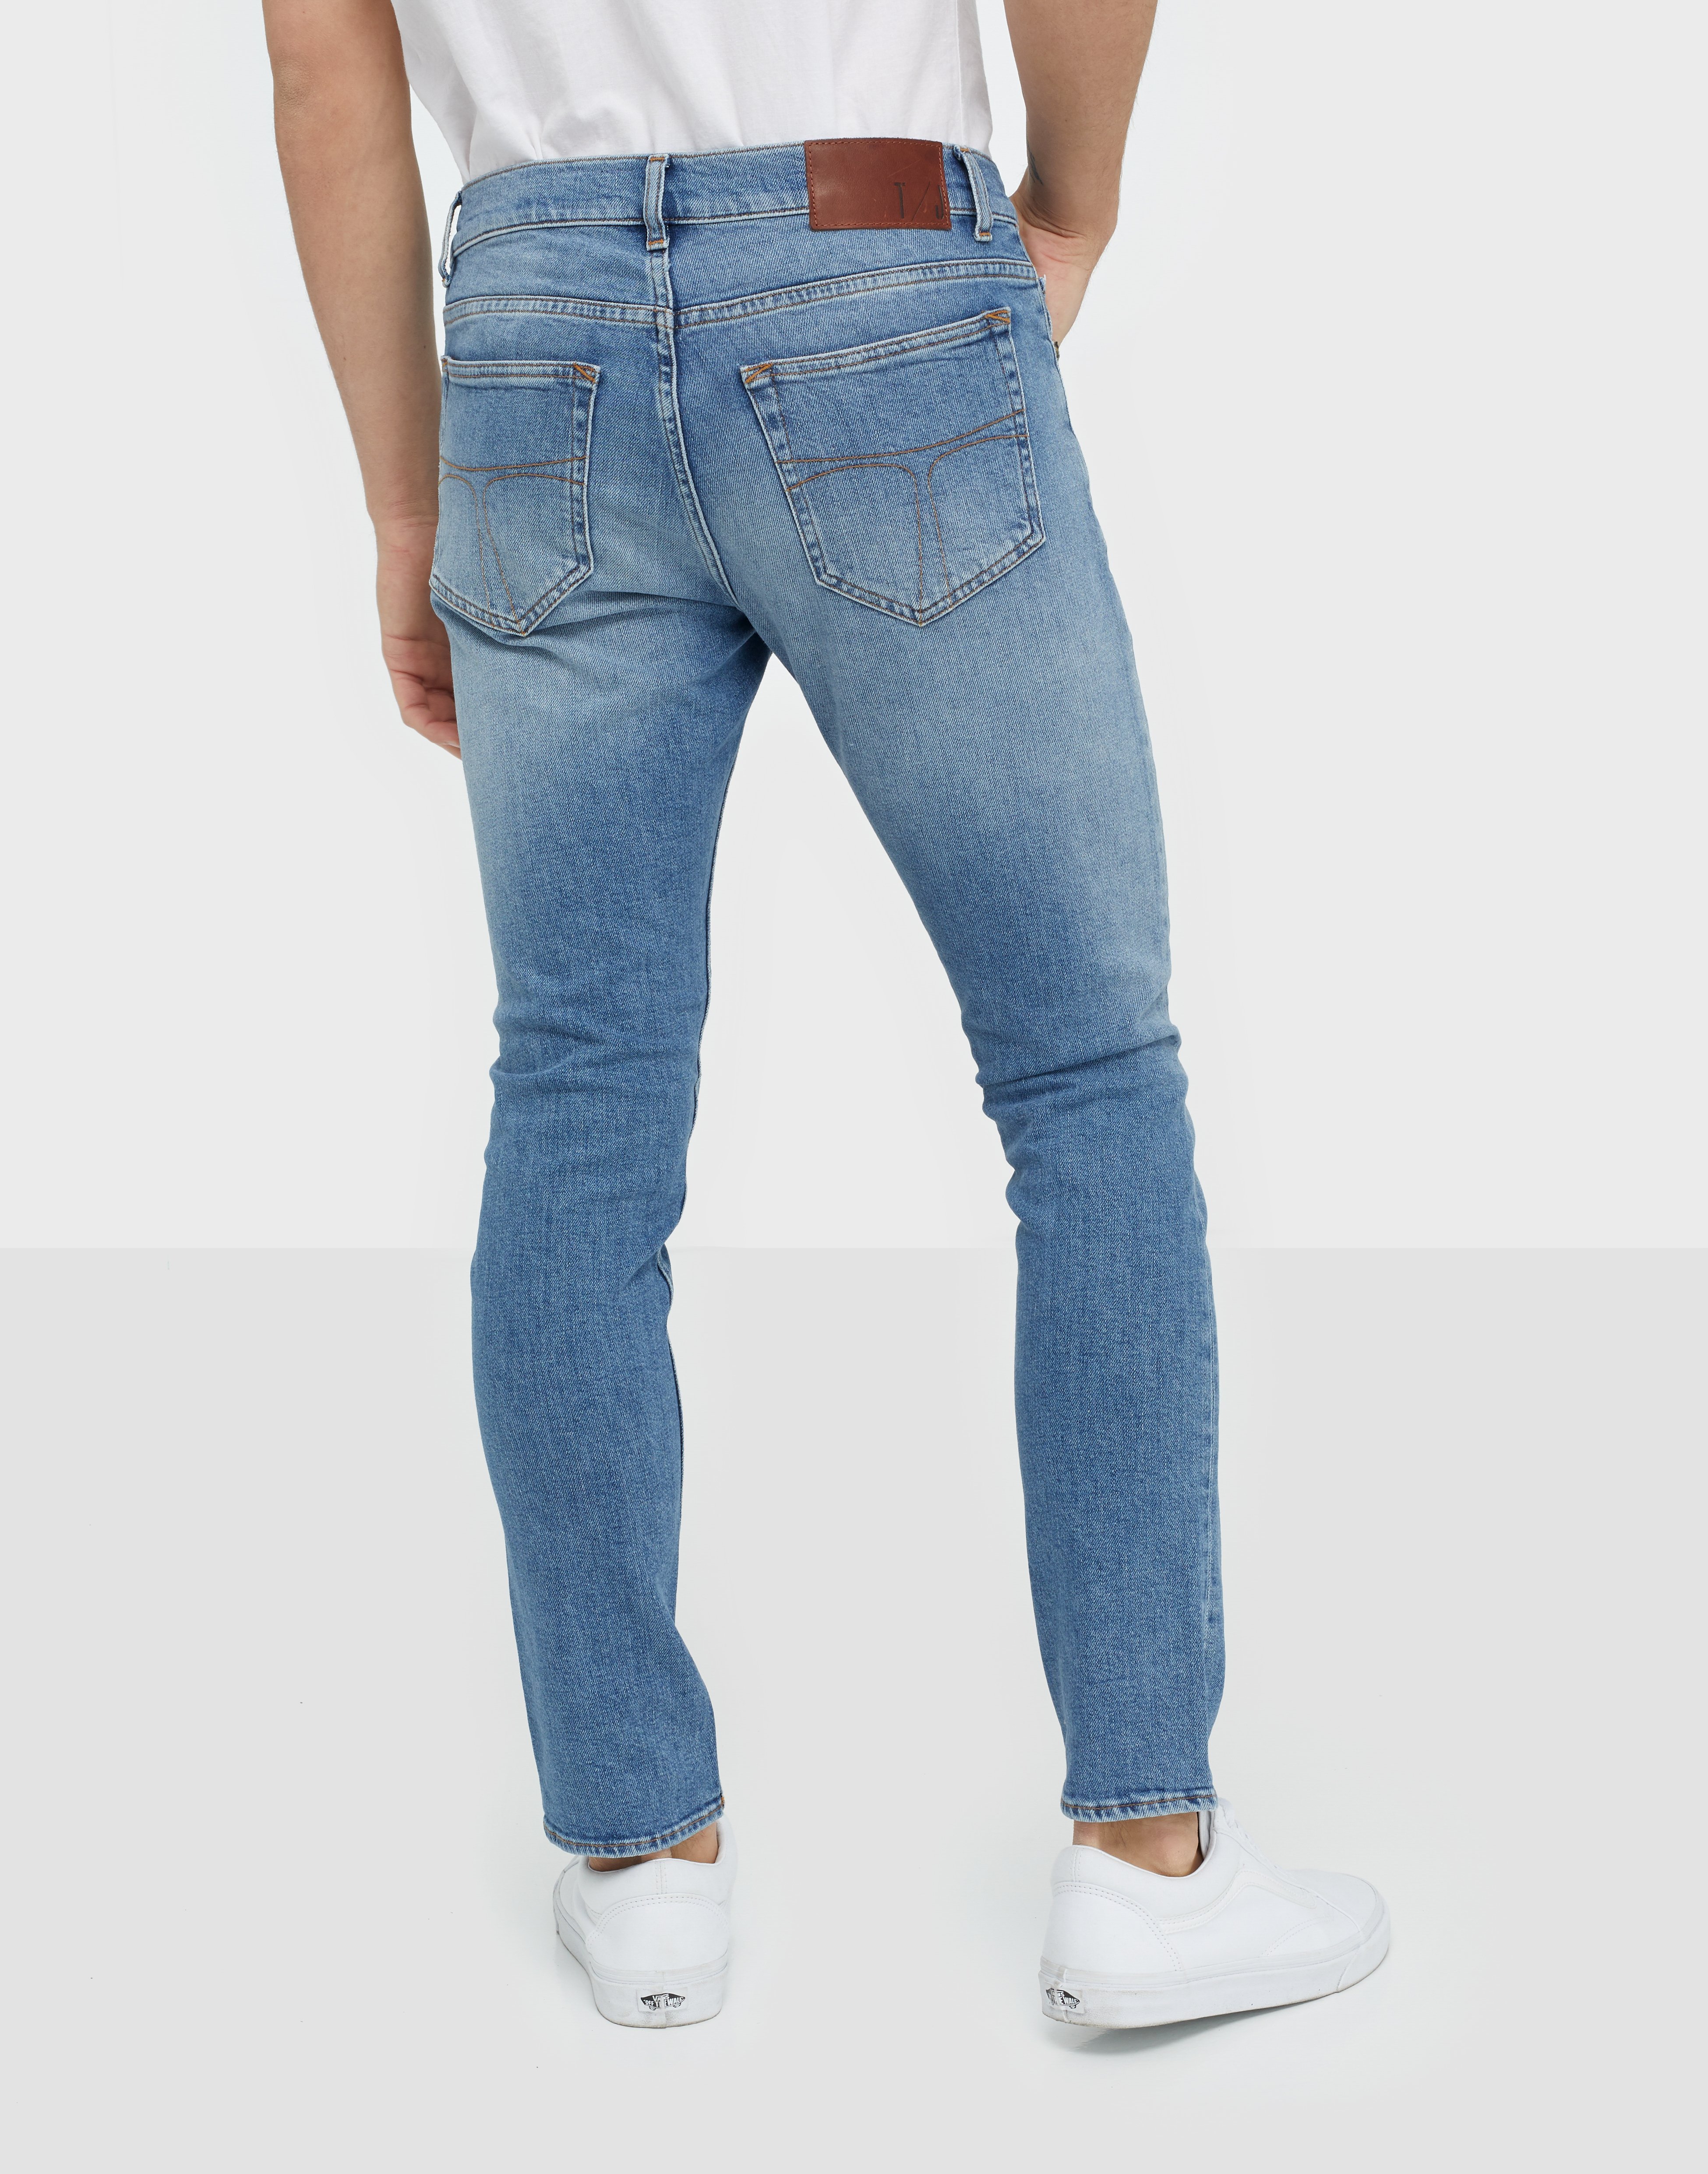 Evolve Jeans - Medium Blue - NLYMAN.COM